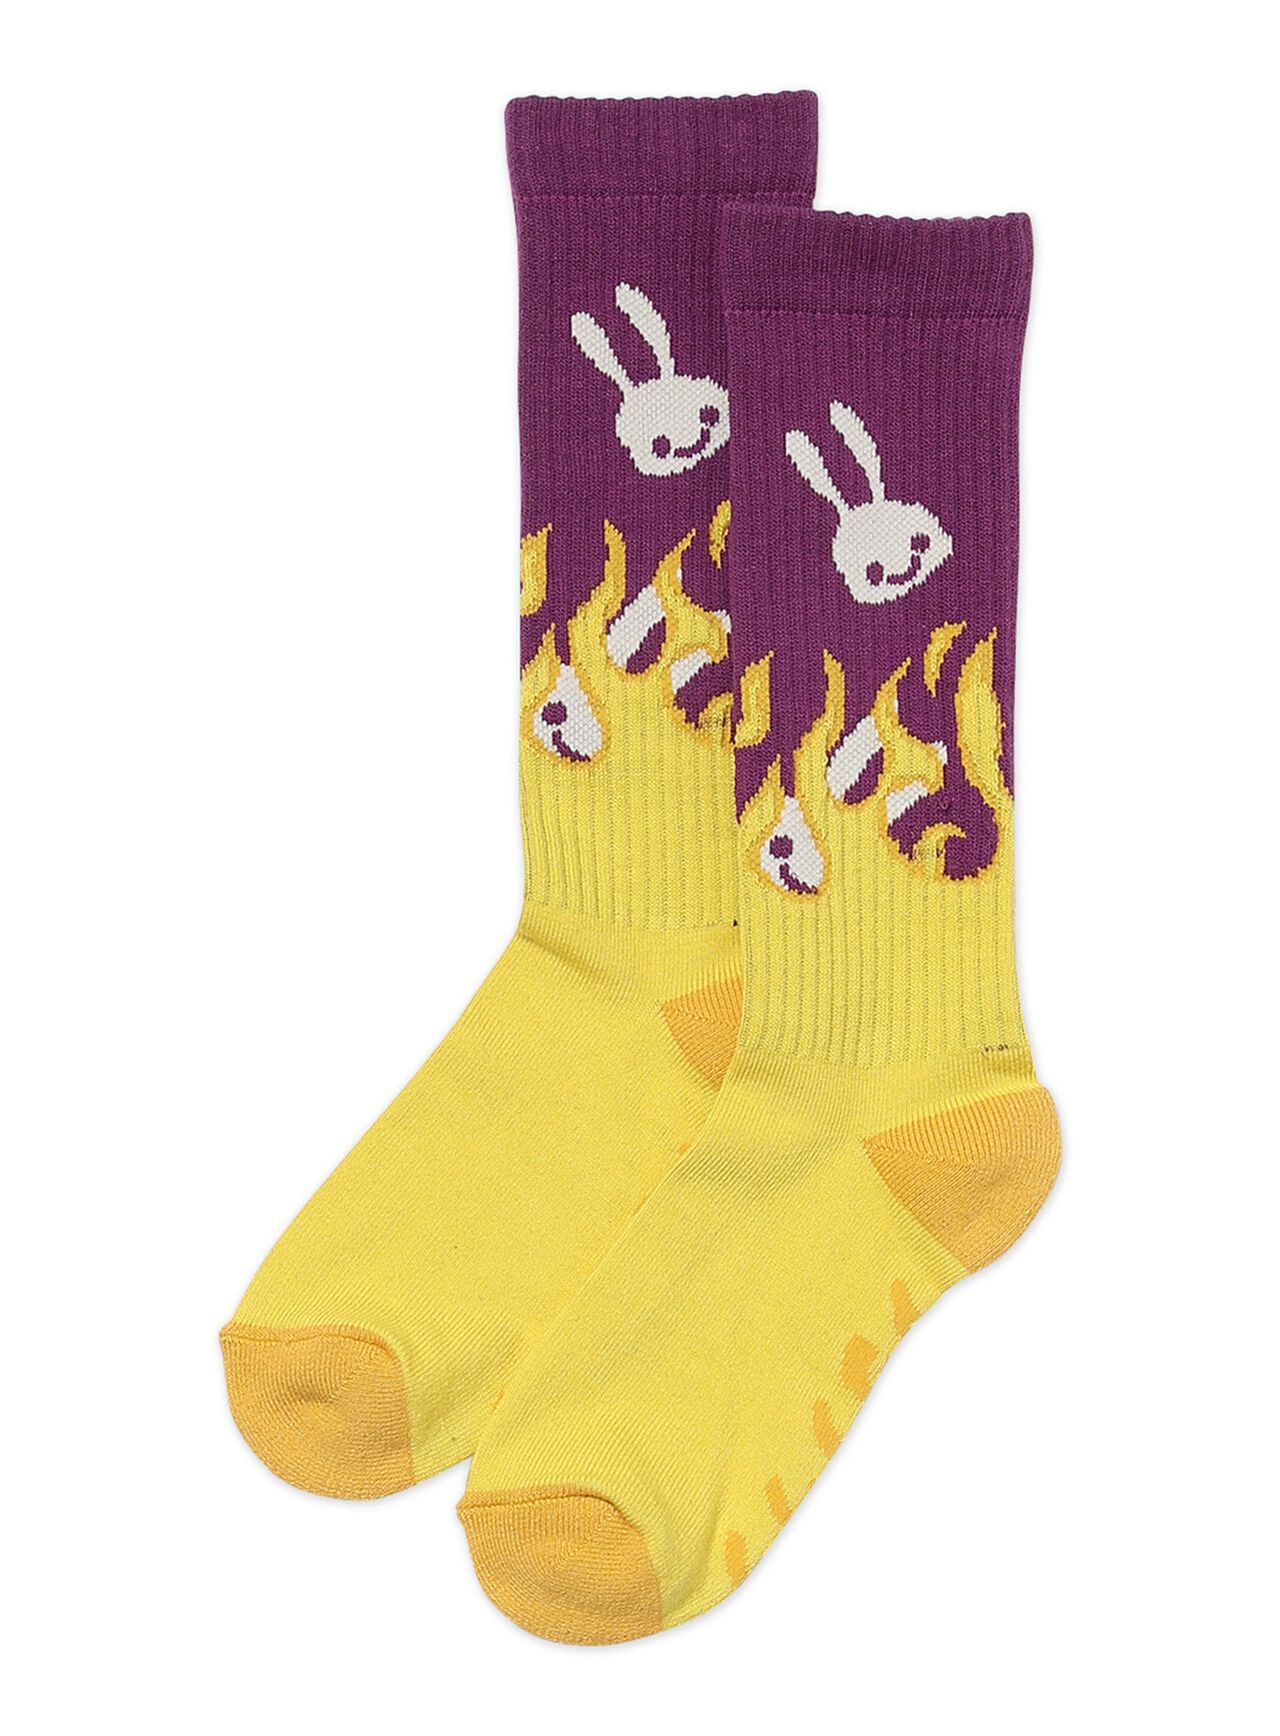 THLJ Souvenir Fire Socks,ONE, large image number 0